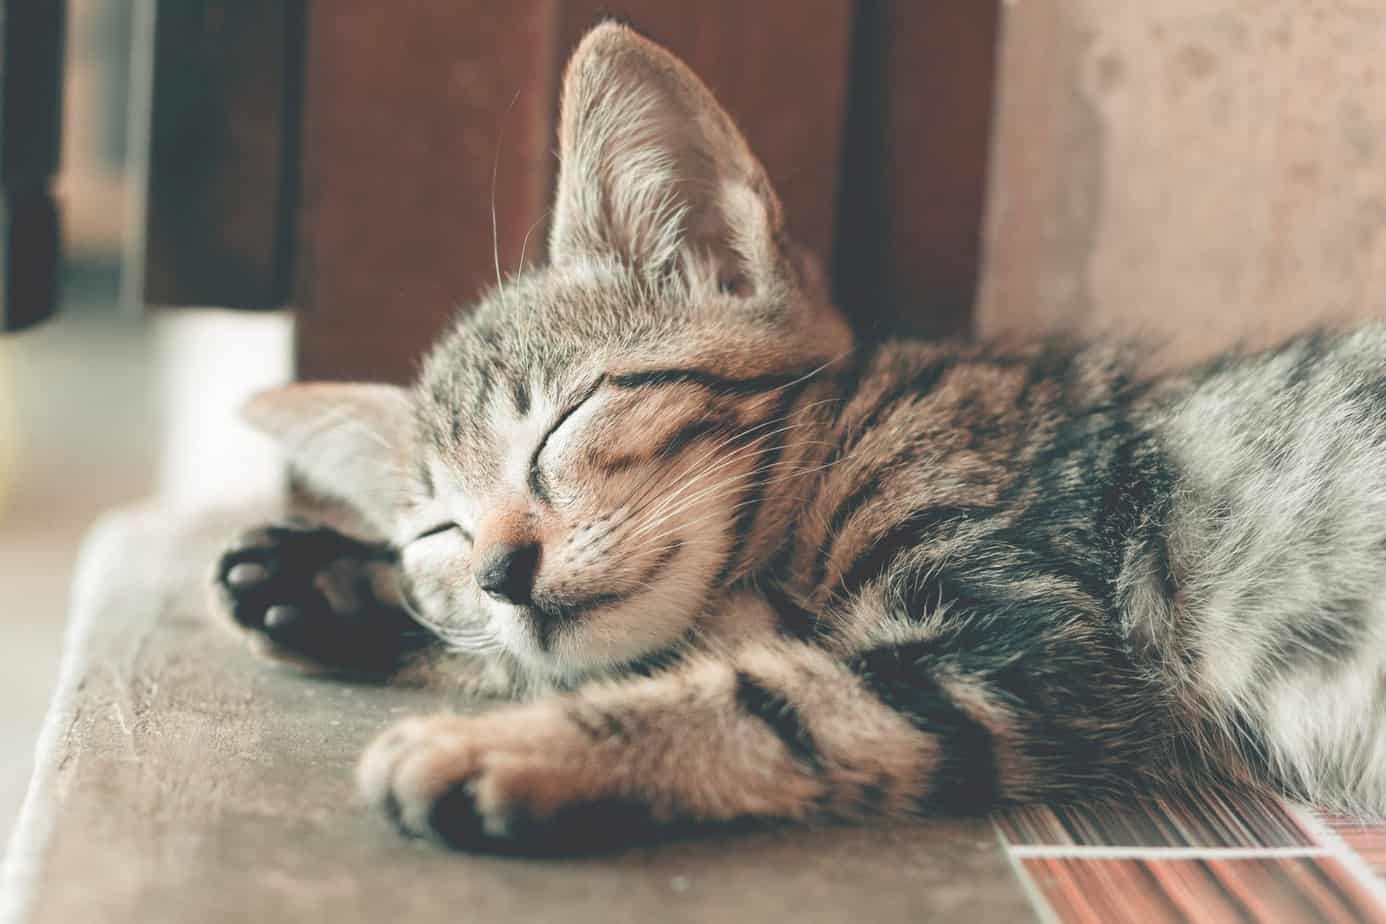 Do Cats Have Bad Dreams?